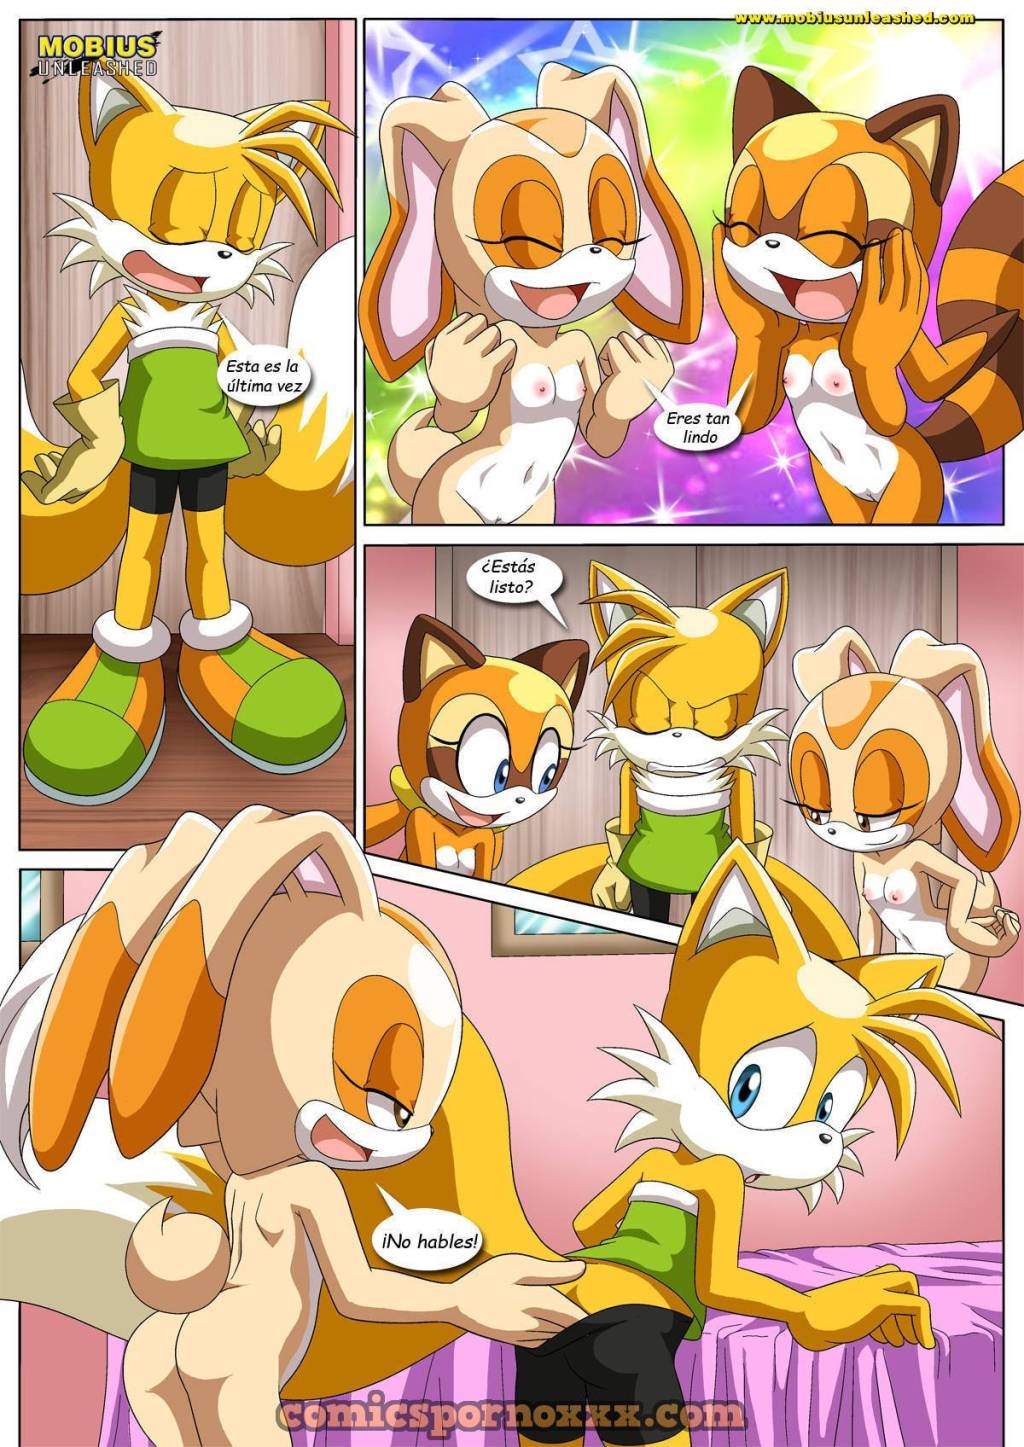 Tails & Cream (Colas y Crema Sonic) - 7 - Comics Porno - Hentai Manga - Cartoon XXX